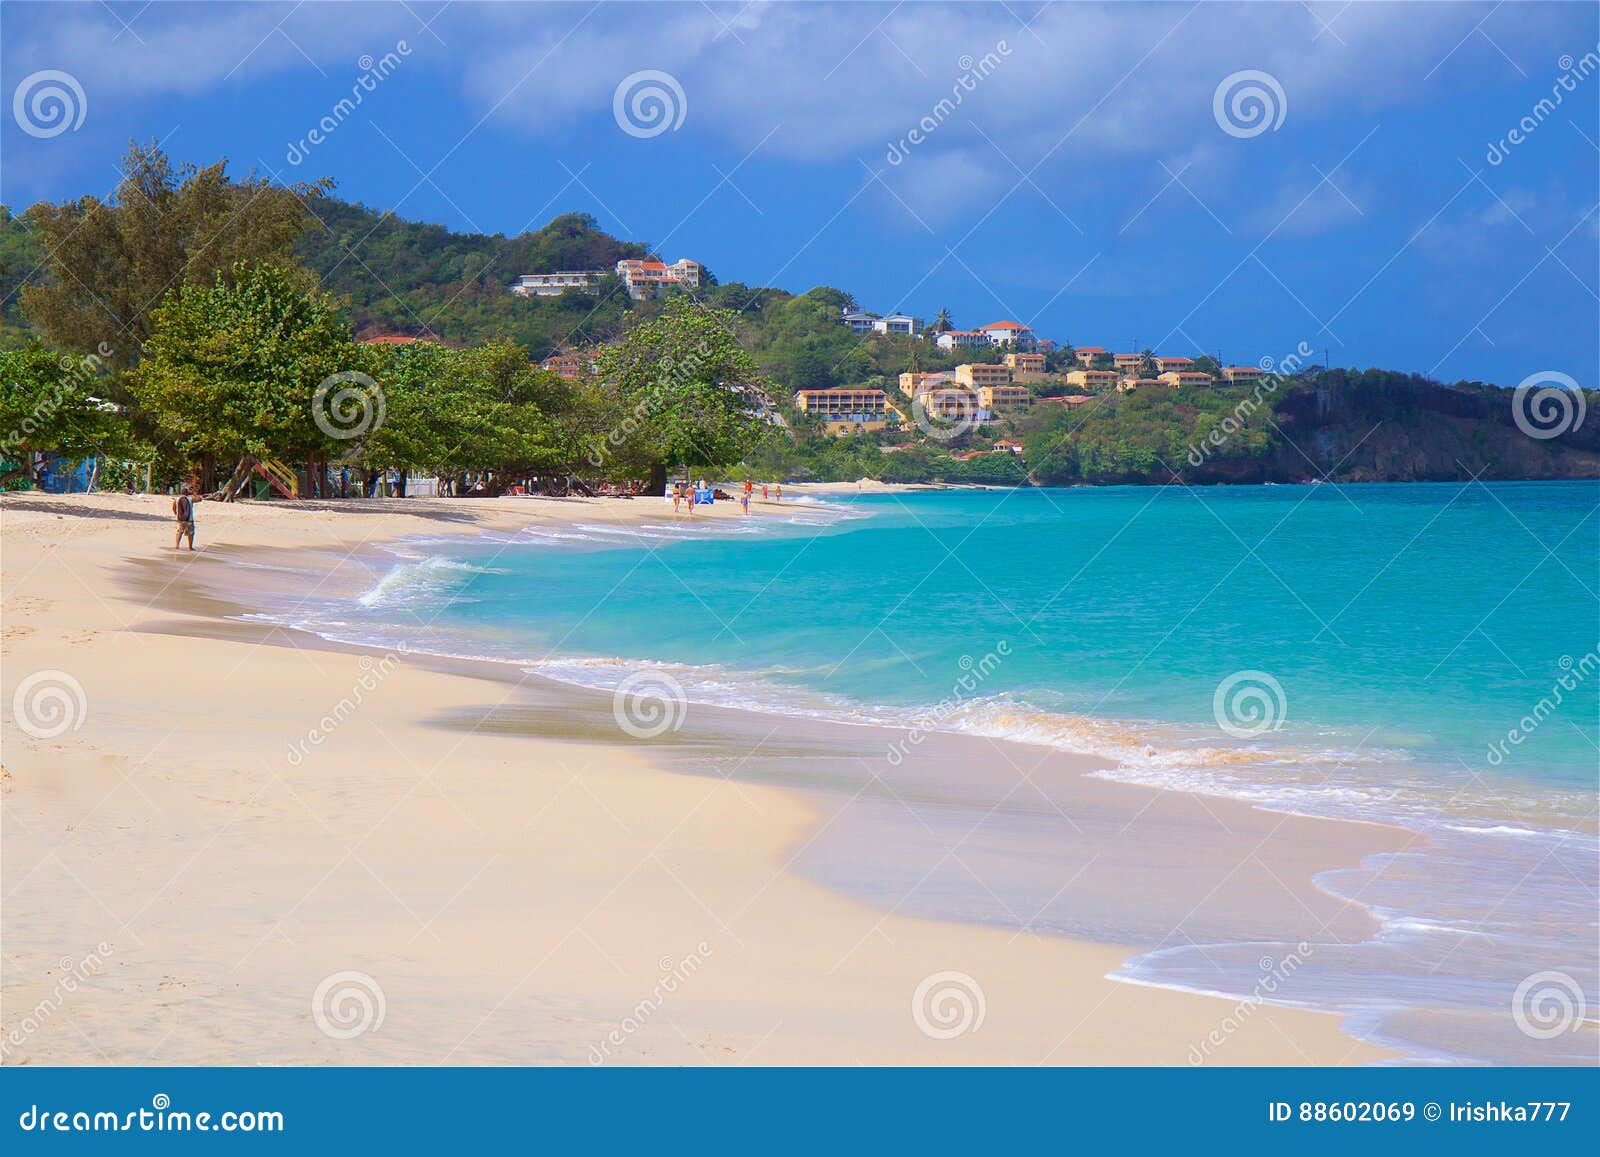 grand anse beach in grenada, caribbean